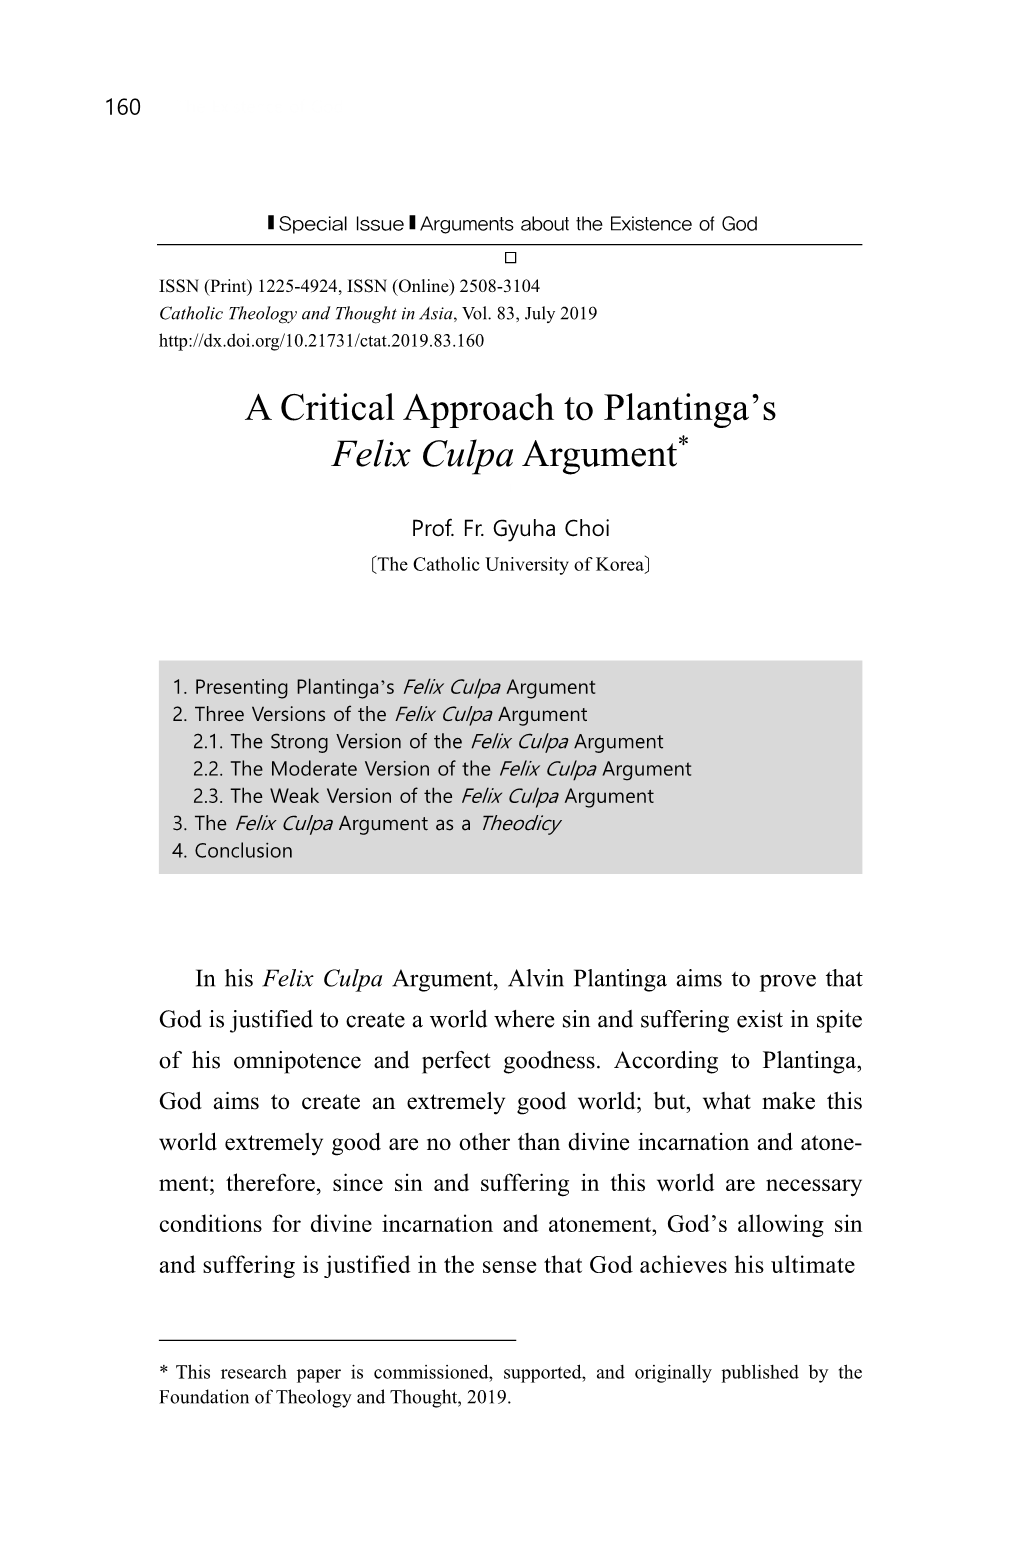 A Critical Approach to Plantinga's Felix Culpa Argument*